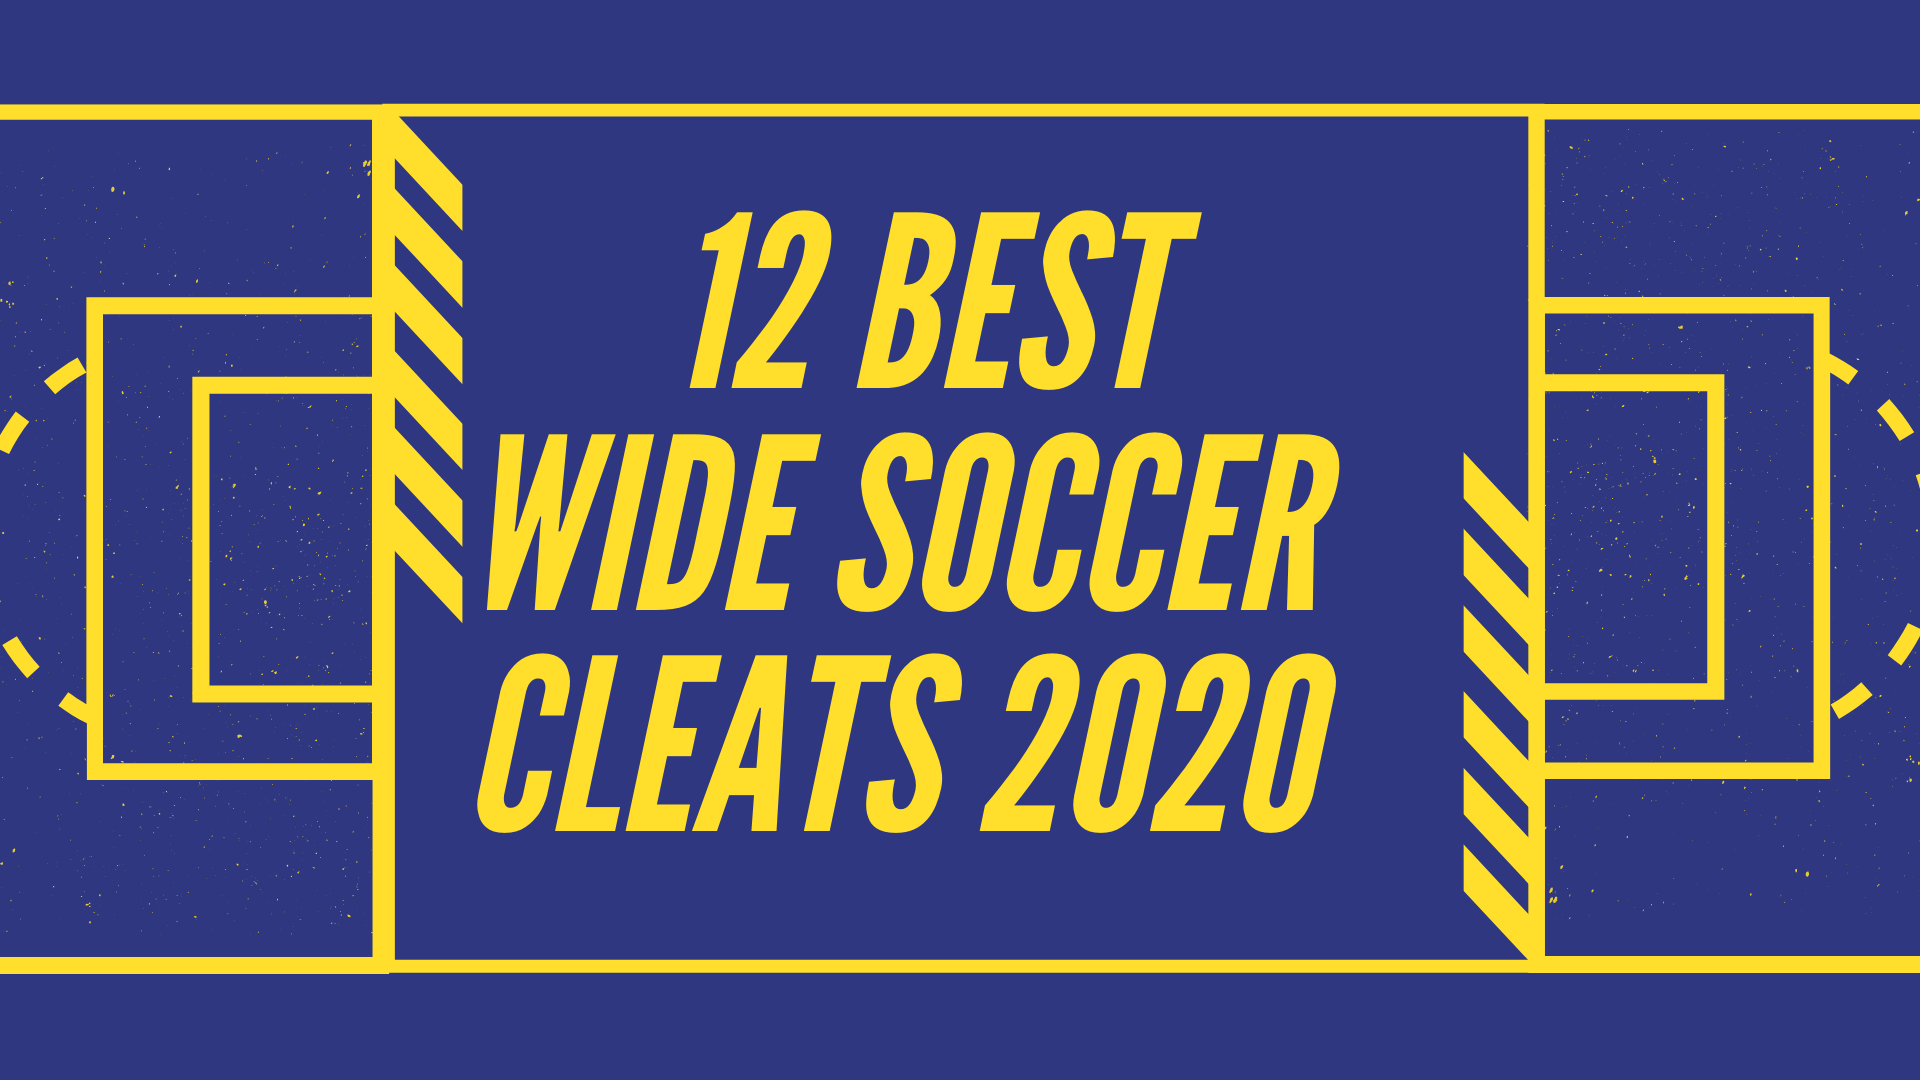 best wide soccer cleats